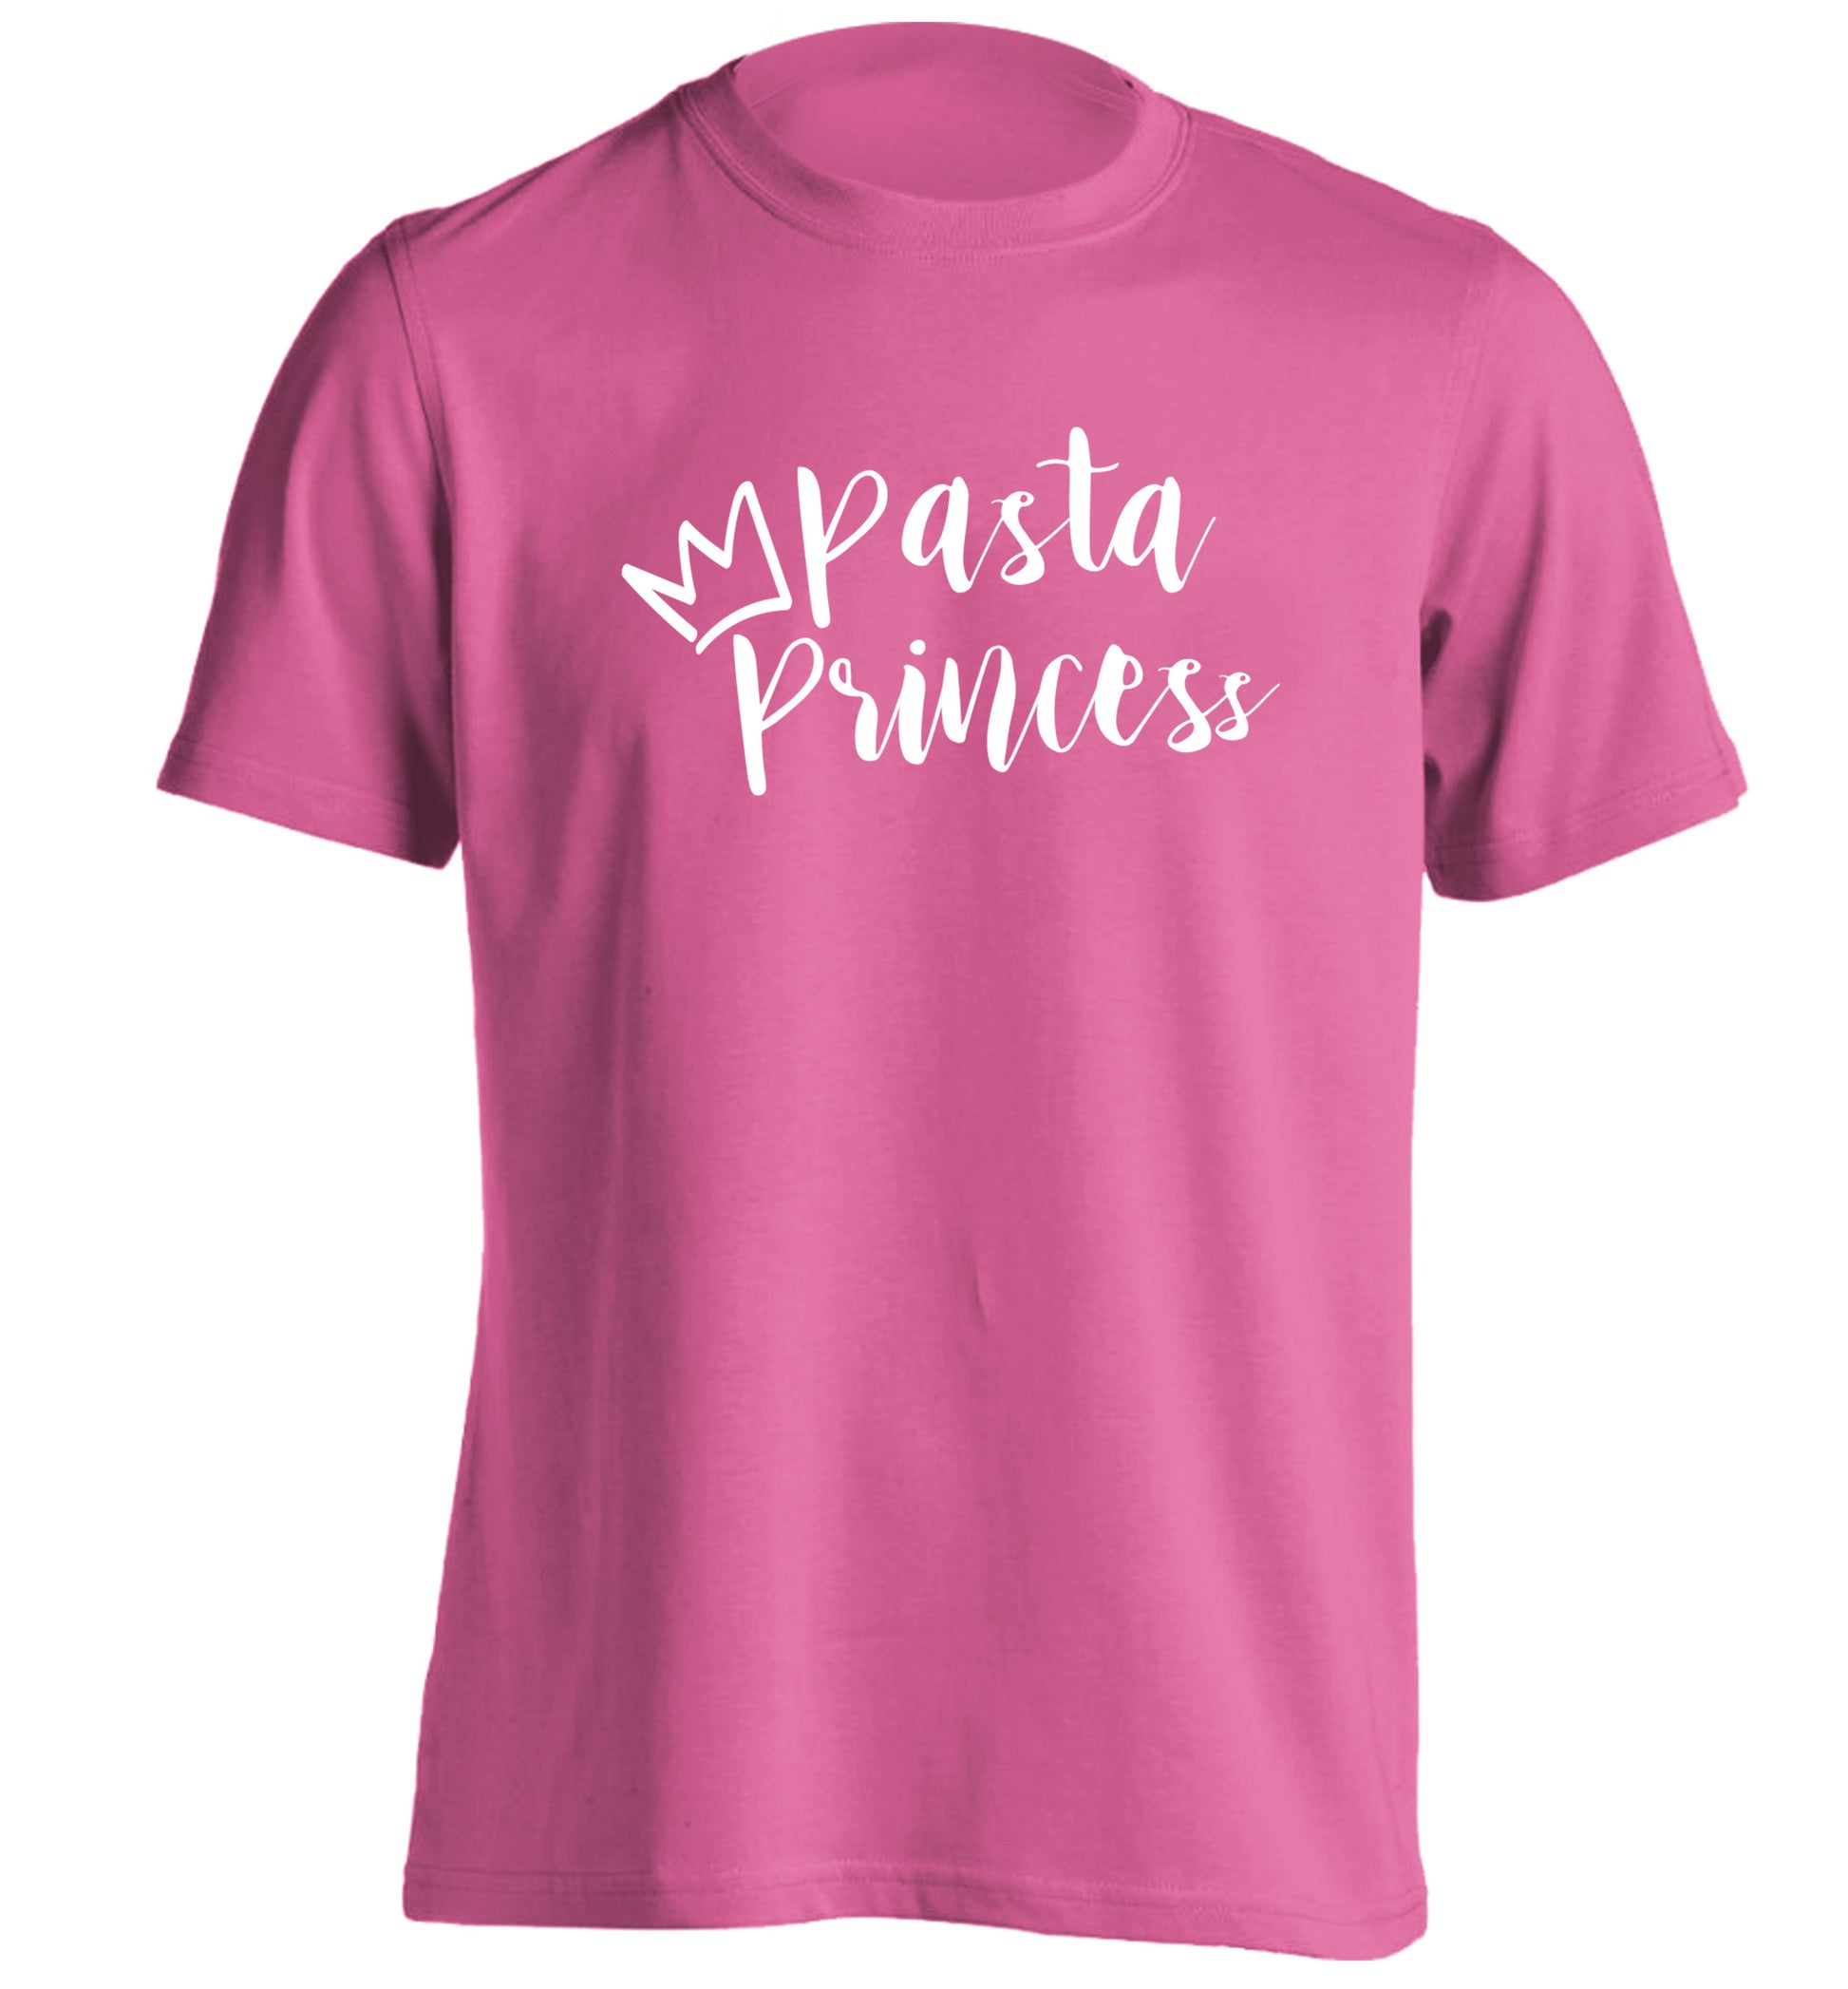 Pasta Princess adults unisex pink Tshirt 2XL